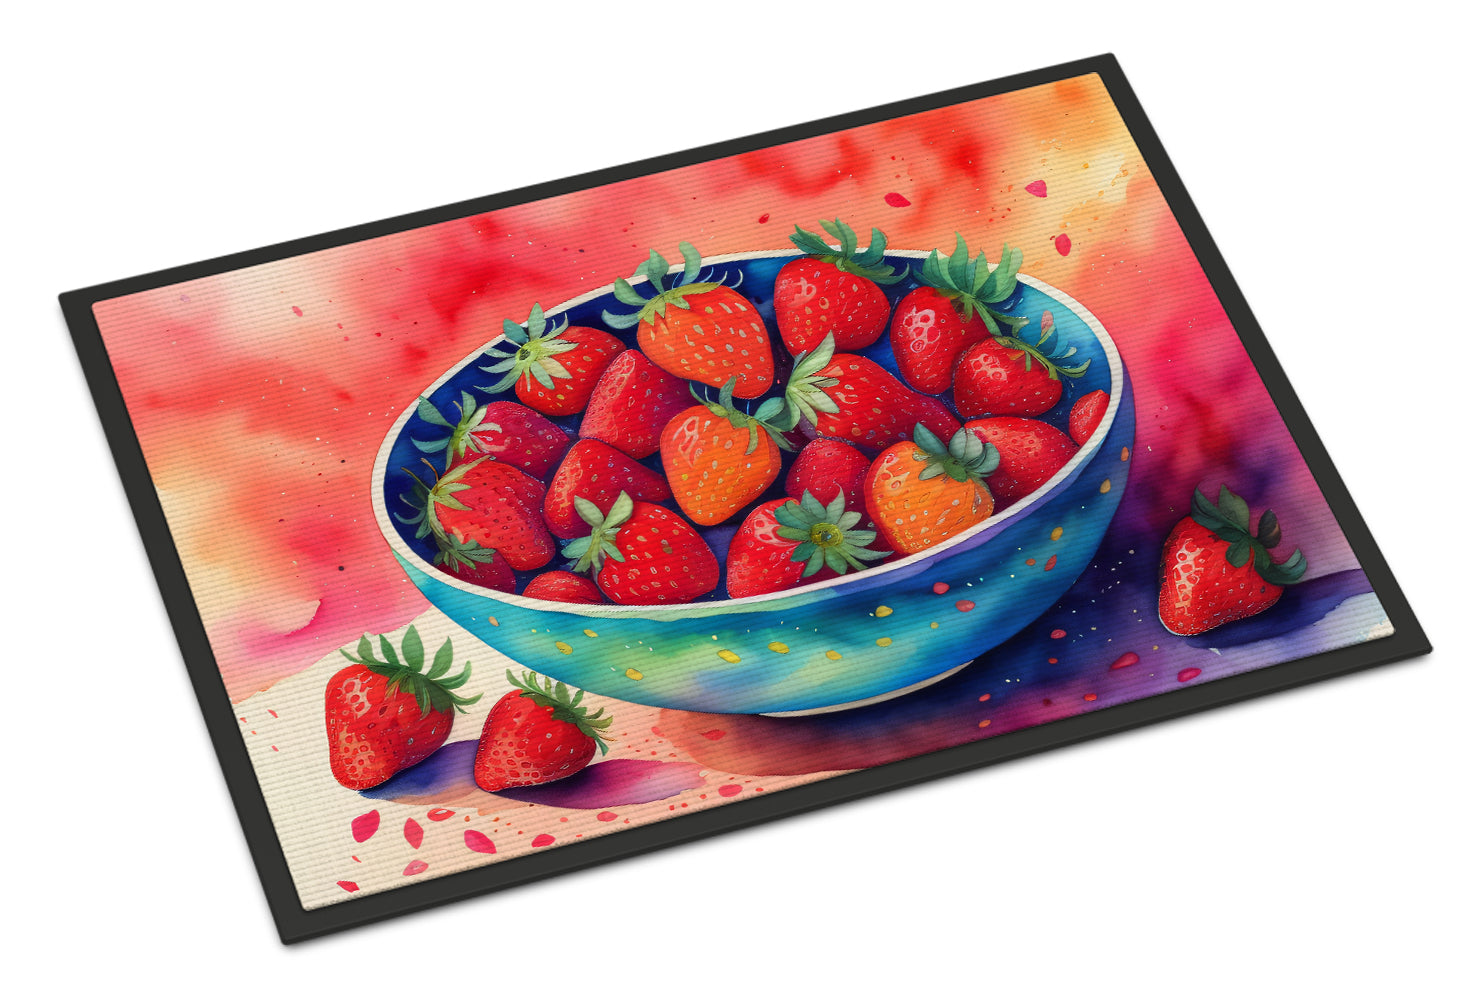 Buy this Colorful Strawberries Doormat 18x27